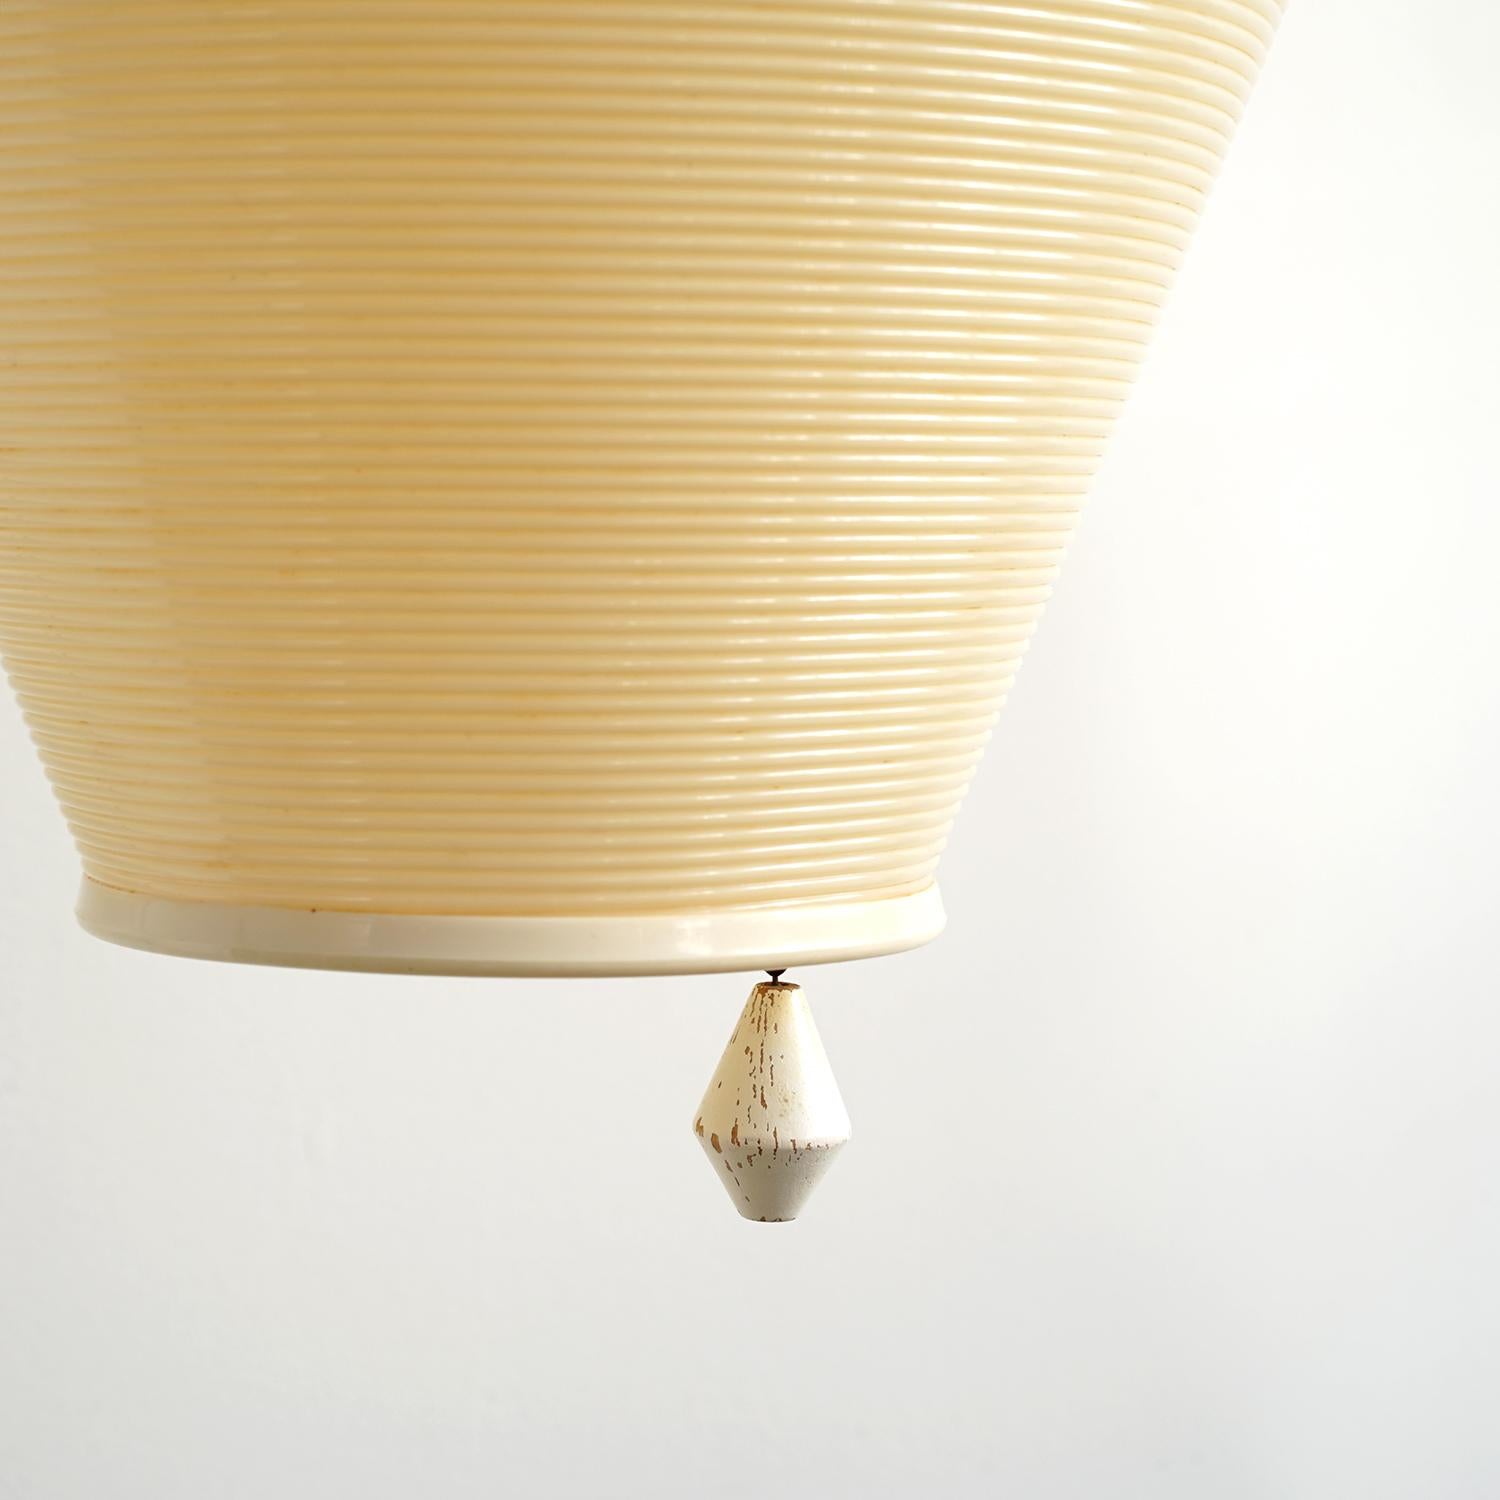 American Adjustable Midcentury Wall Light Sconce by Heifetz Rotaflex